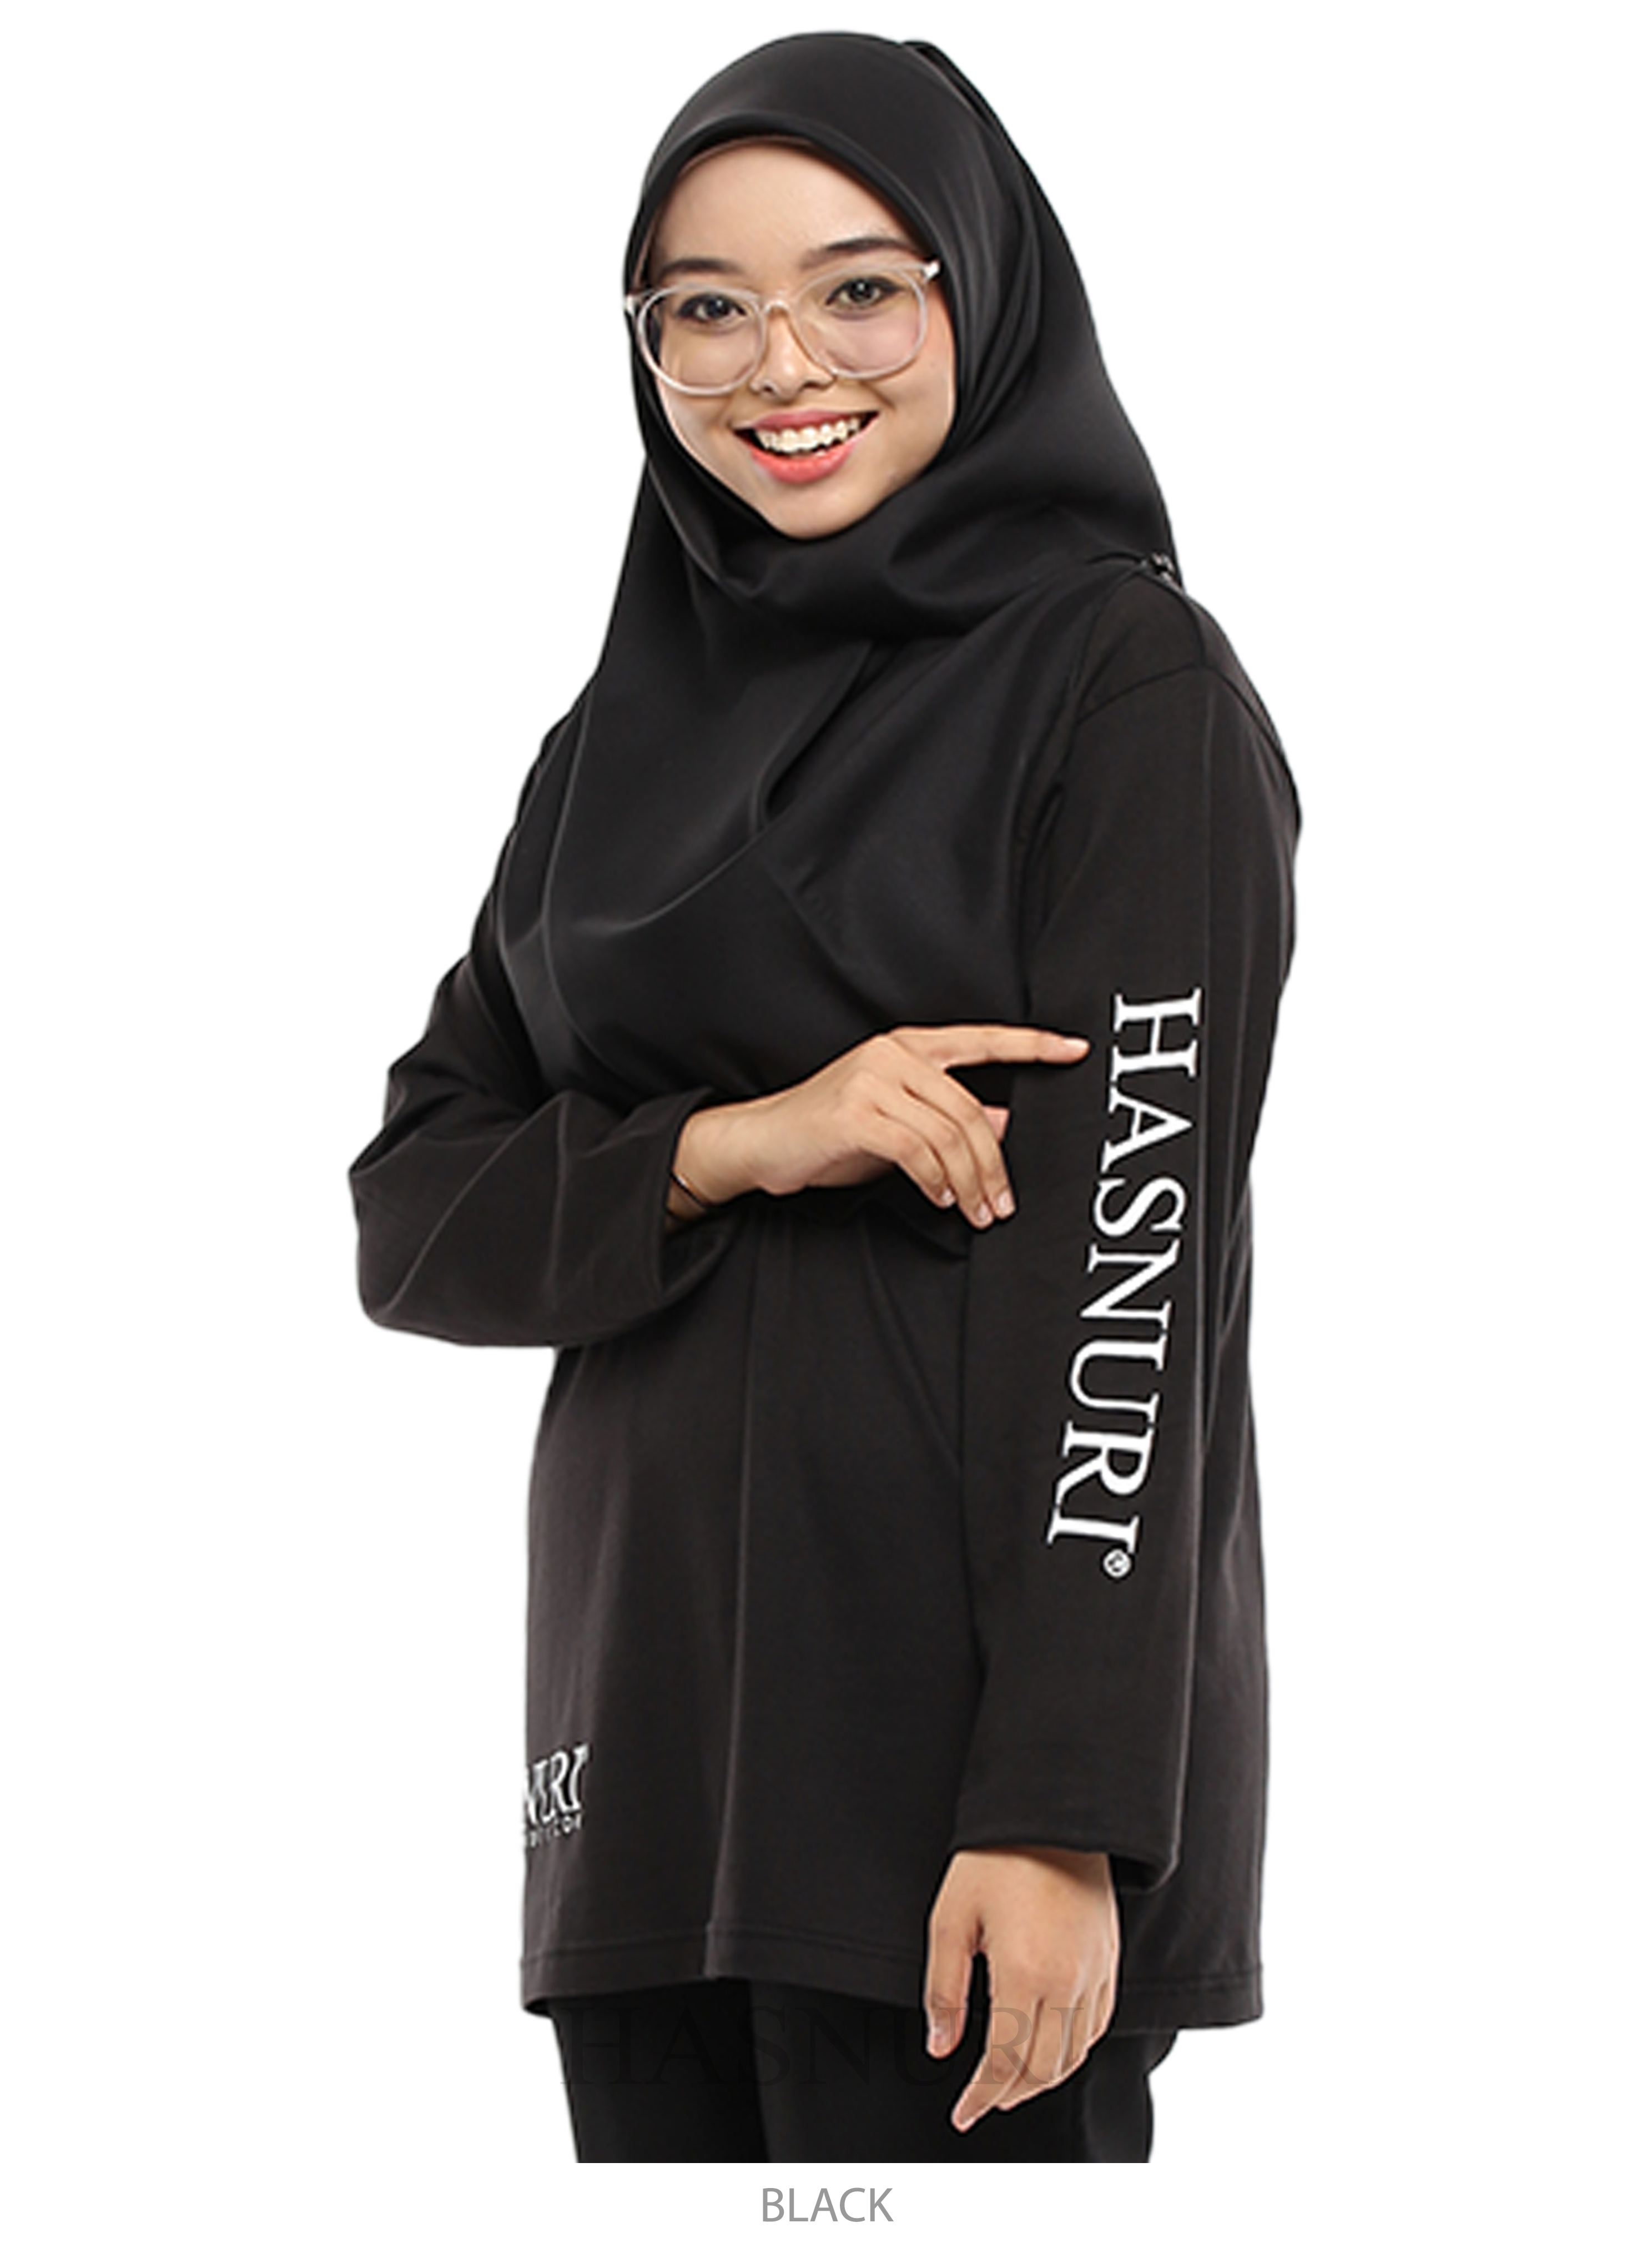 T-shirt Hasnuri Women - Black